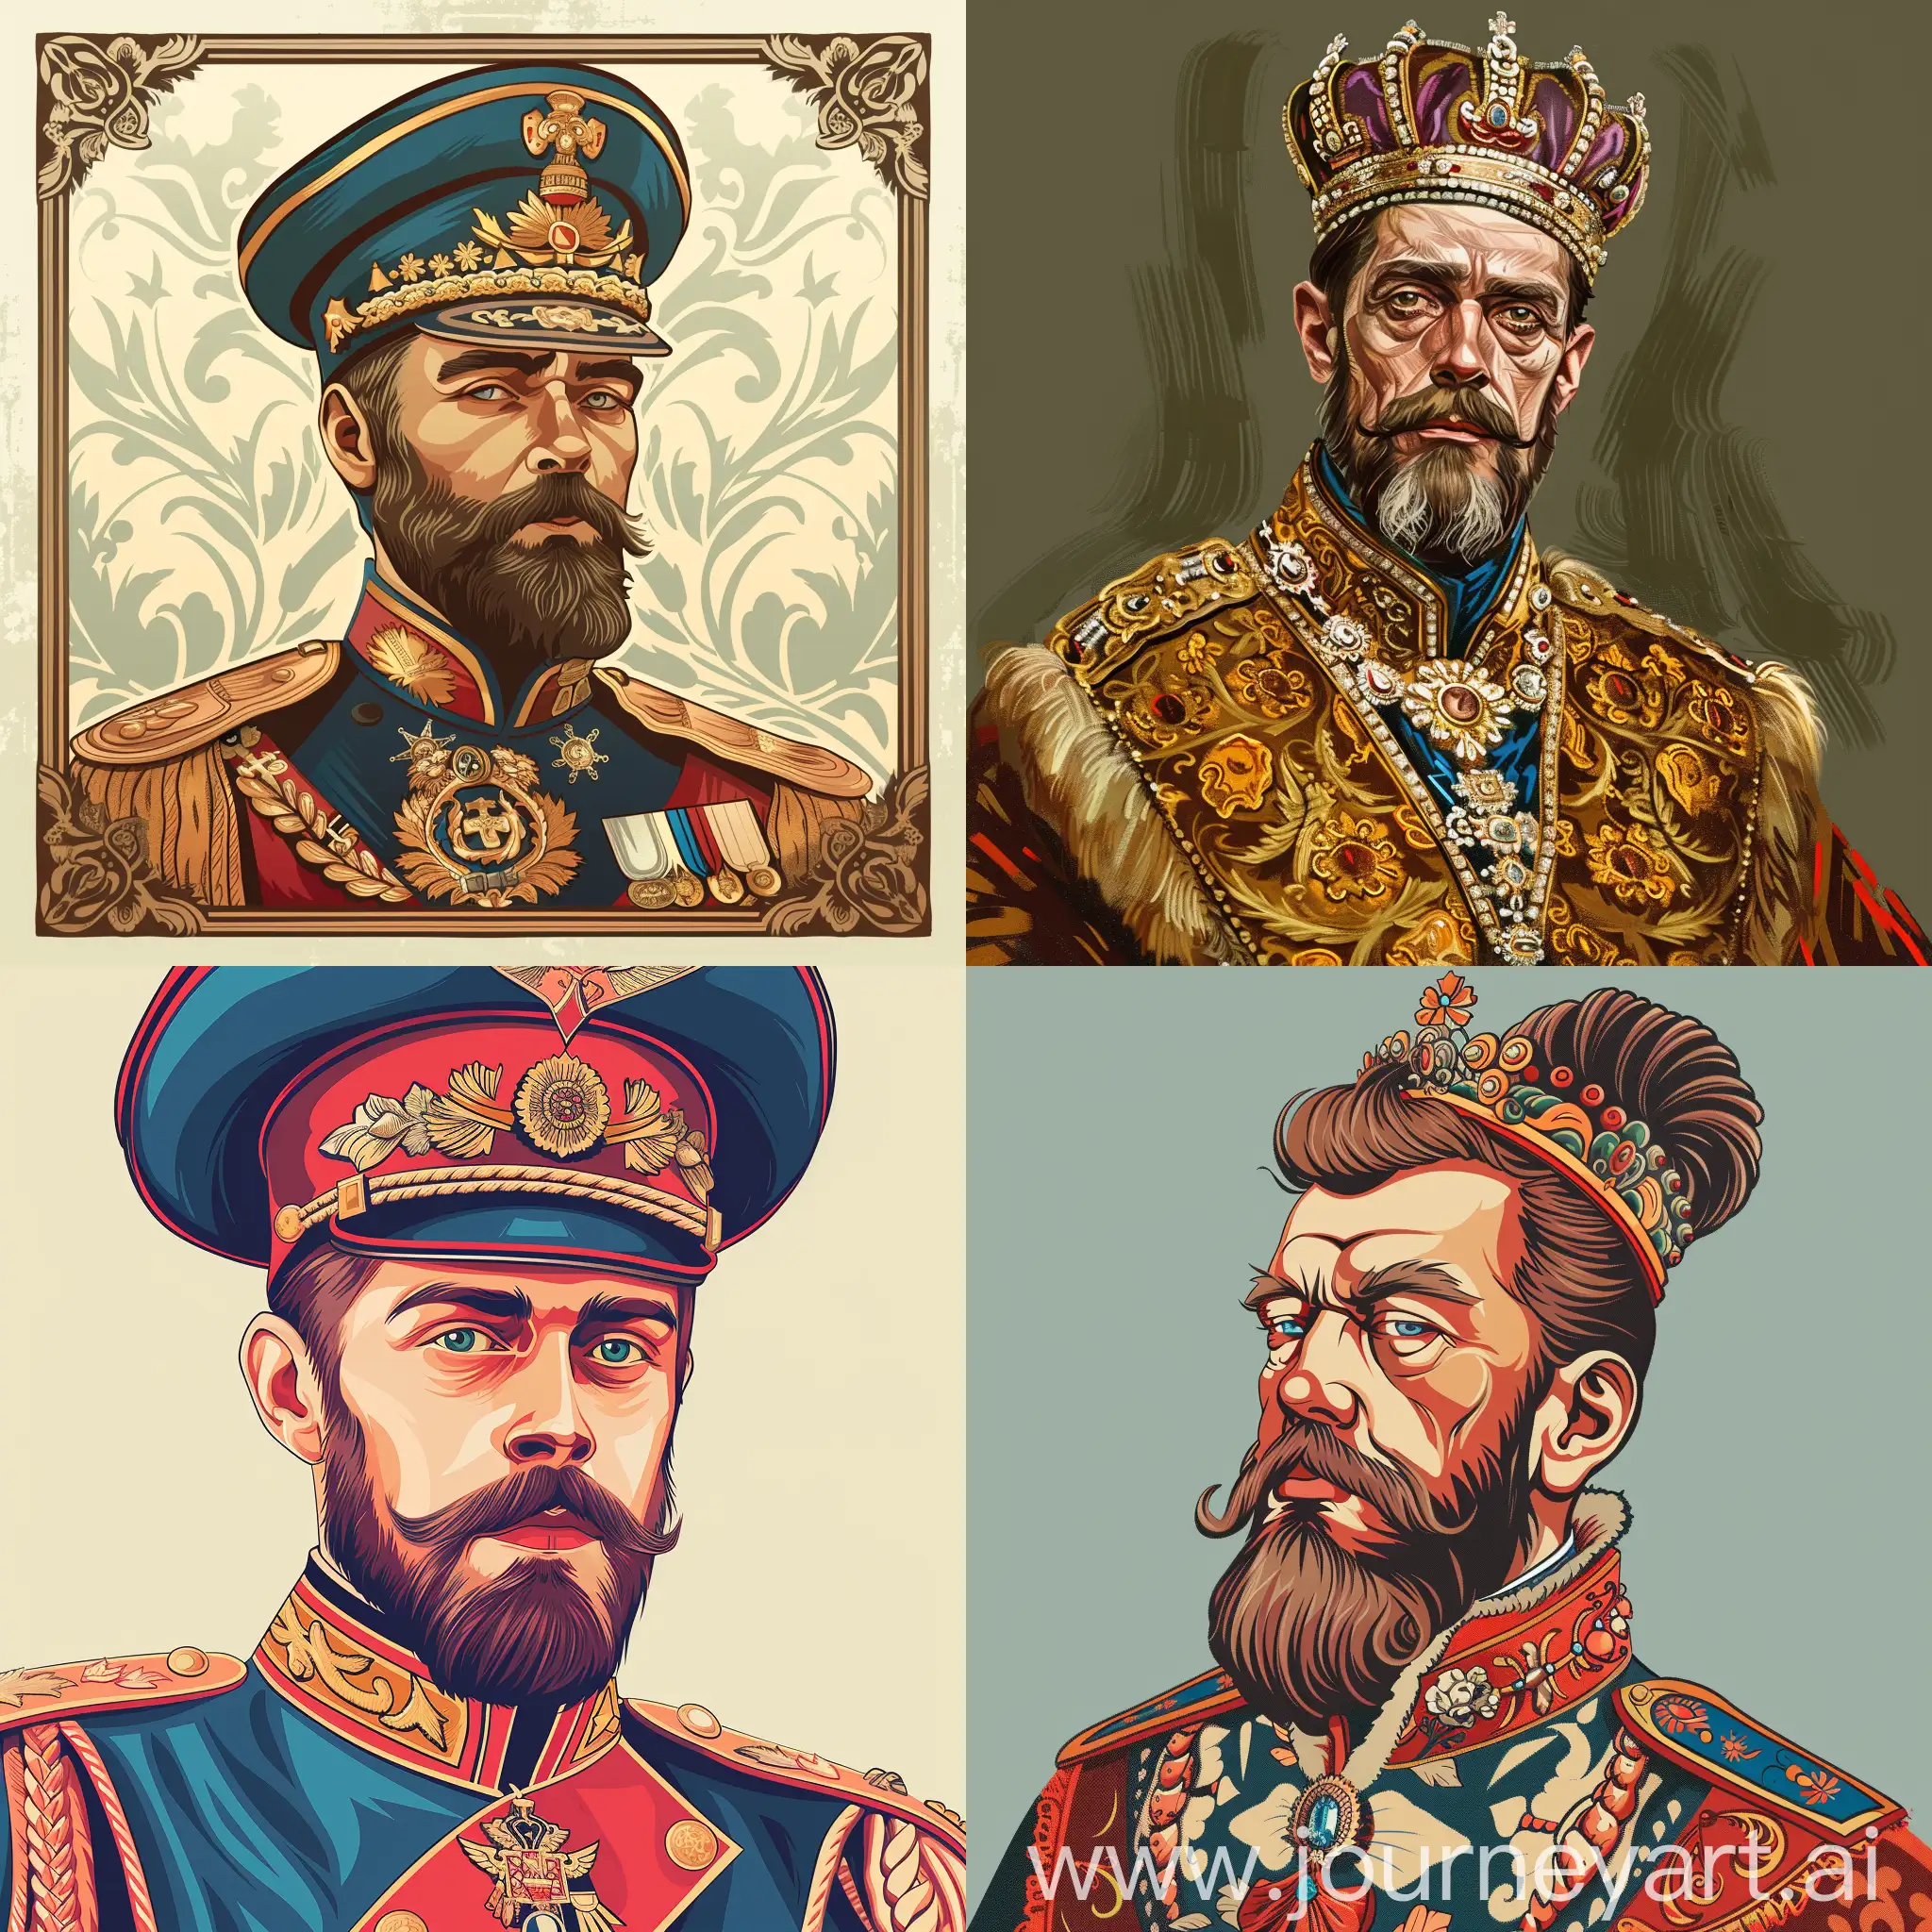 Botpic, an avatar for a service, flat, sketch, times new roman, templates profession, Russian tsar, tsar, human portrait